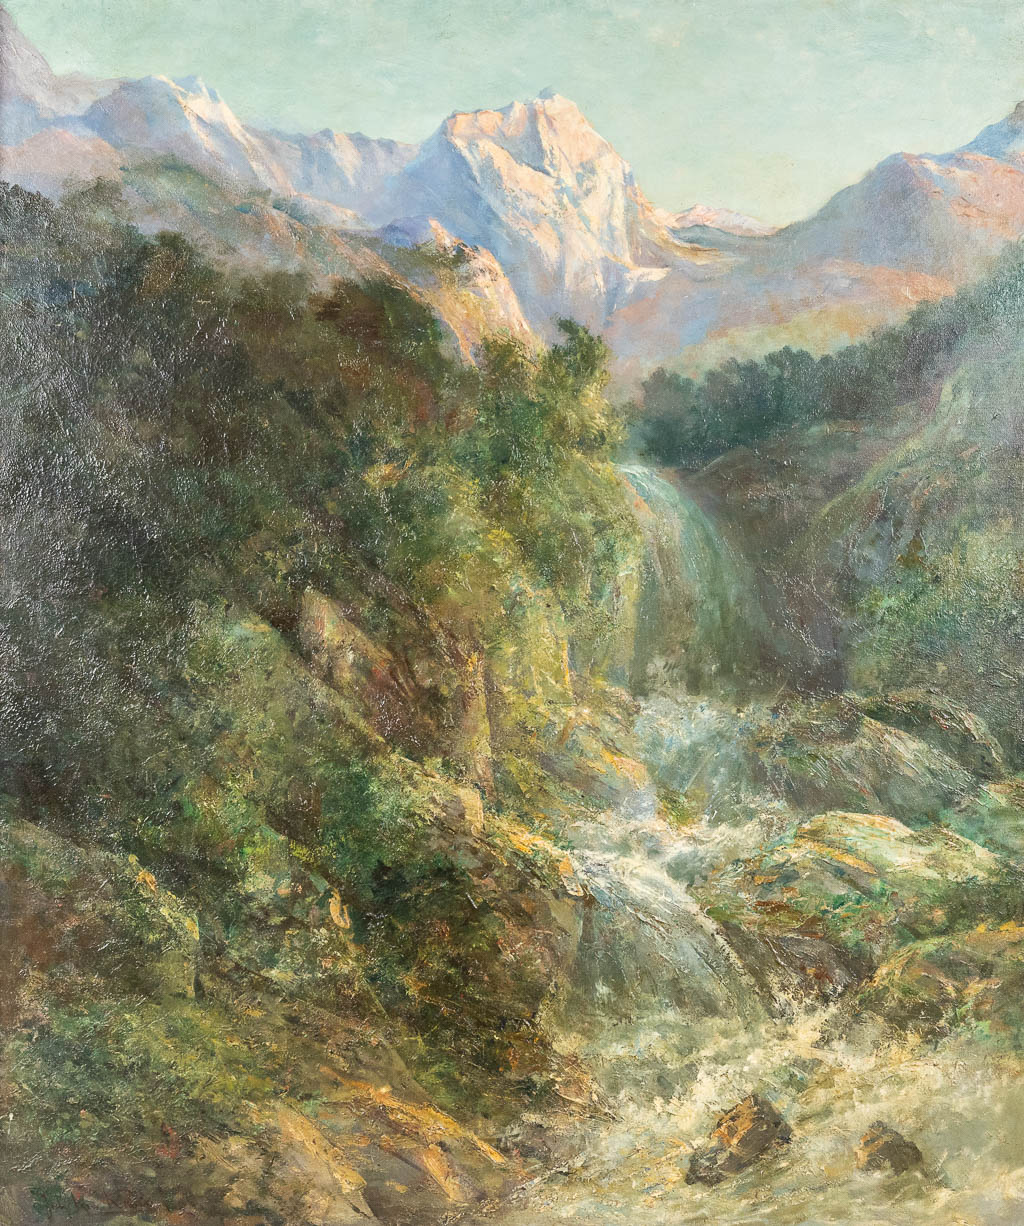 Jan TEN KATE (1850-1929) 'Waterfall in mountain view' oil on canvas. (W:120 x H:145 cm)